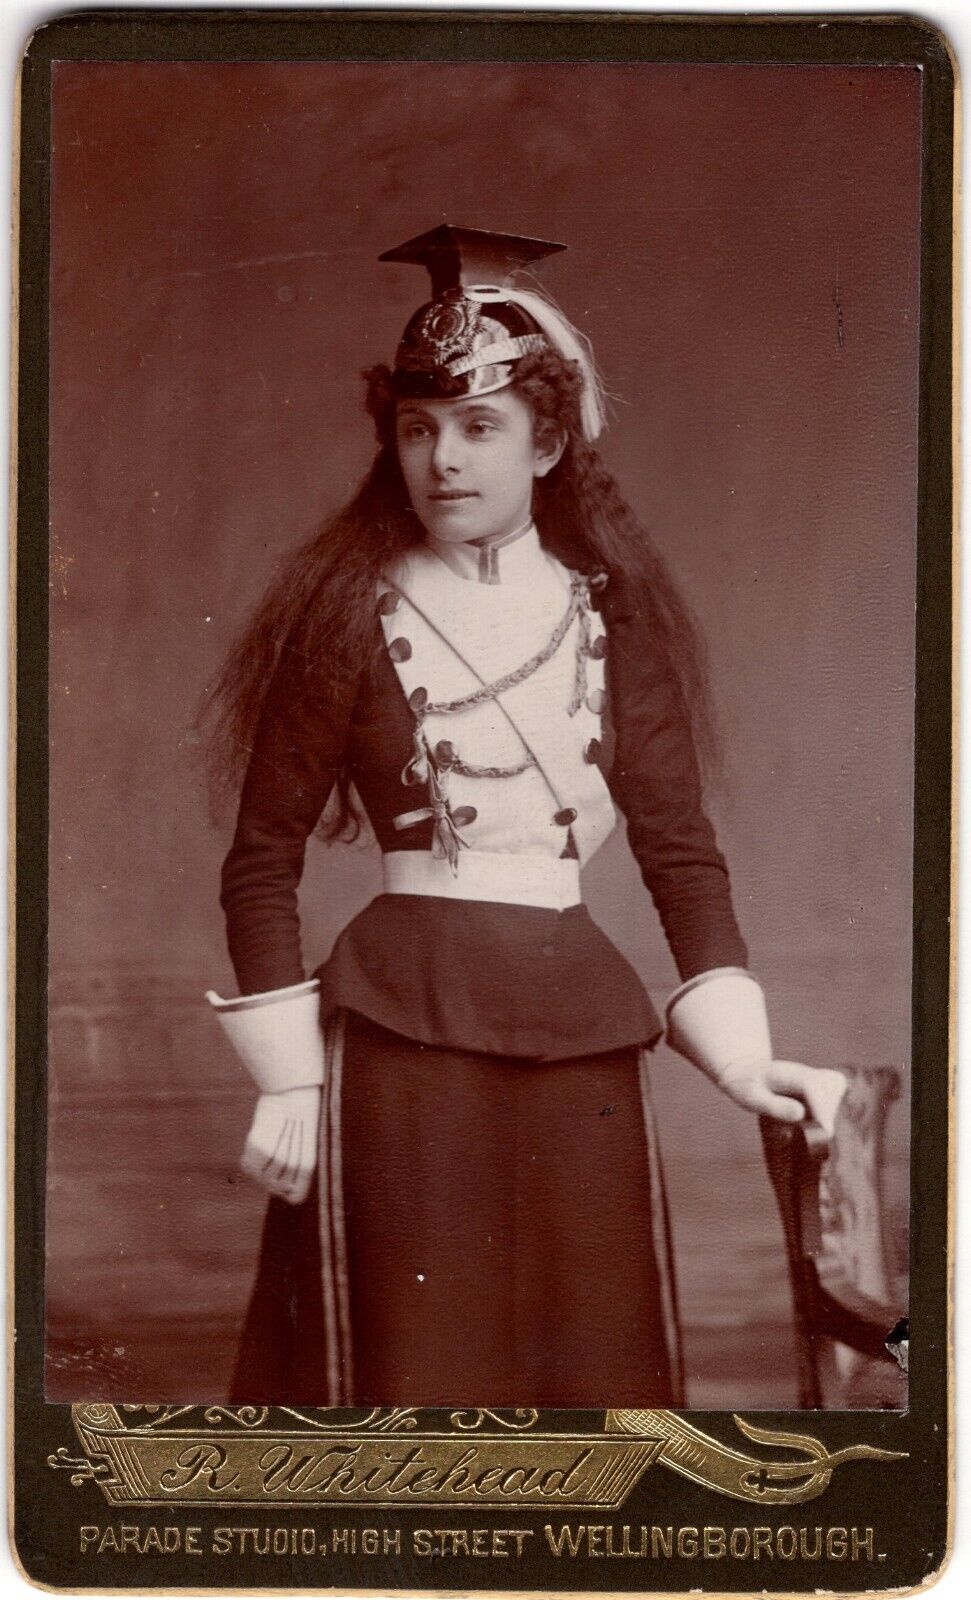 CIRCA 1880s CDV R. WHITEHEAD LADY IN CALVALRY UNIFORM PARADE STUDIO ENGLAND